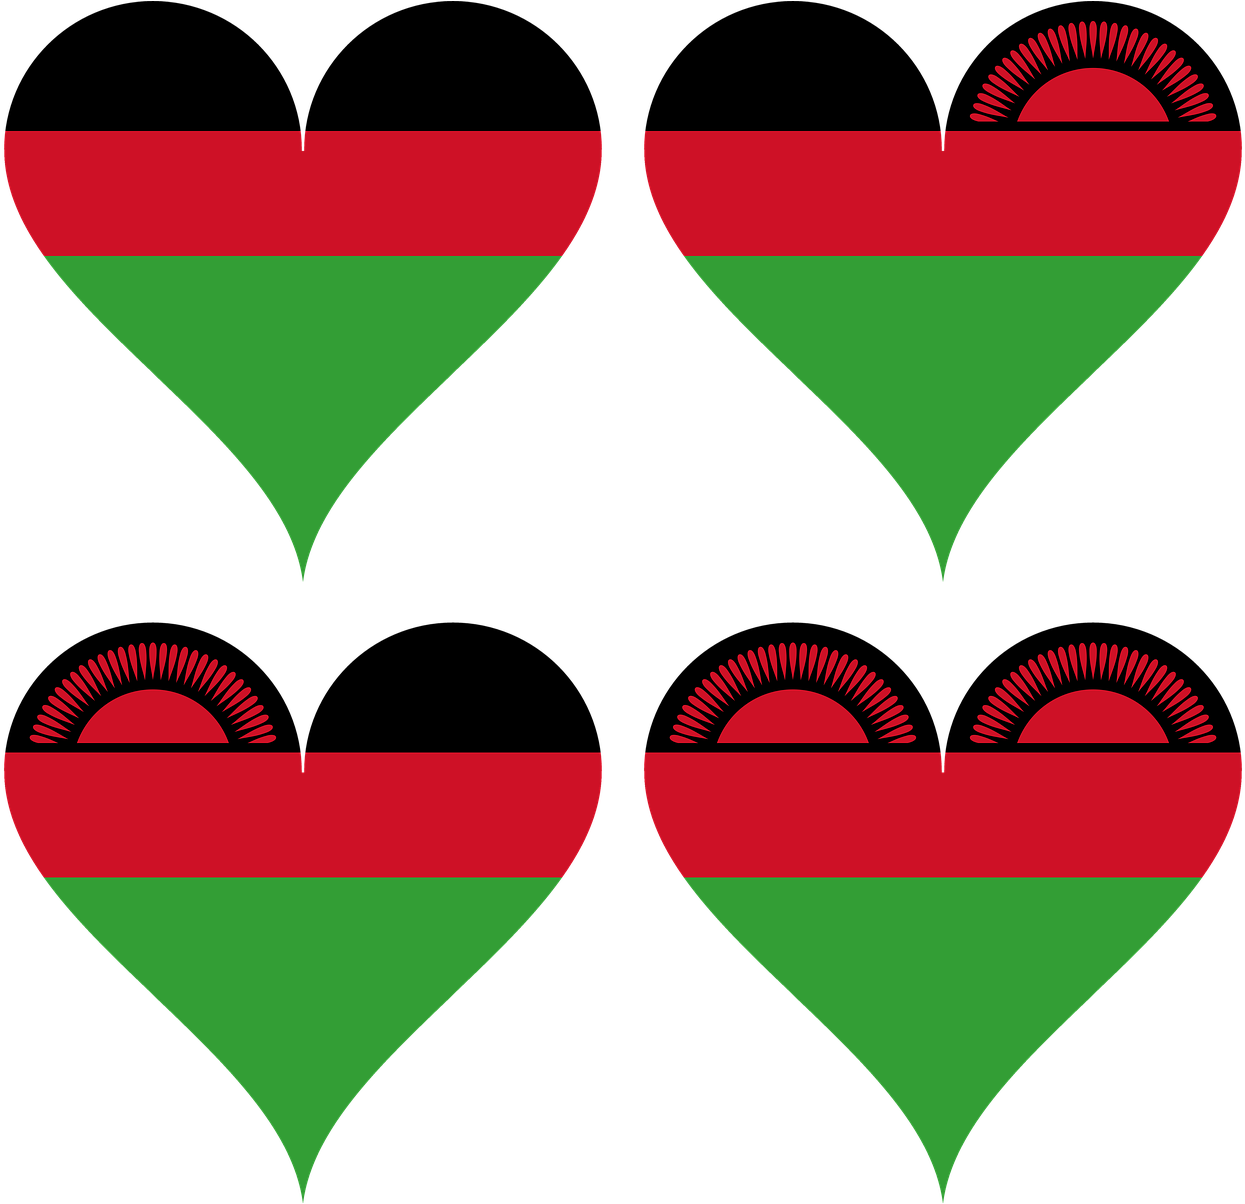 Malawi Flag Background PNG Image